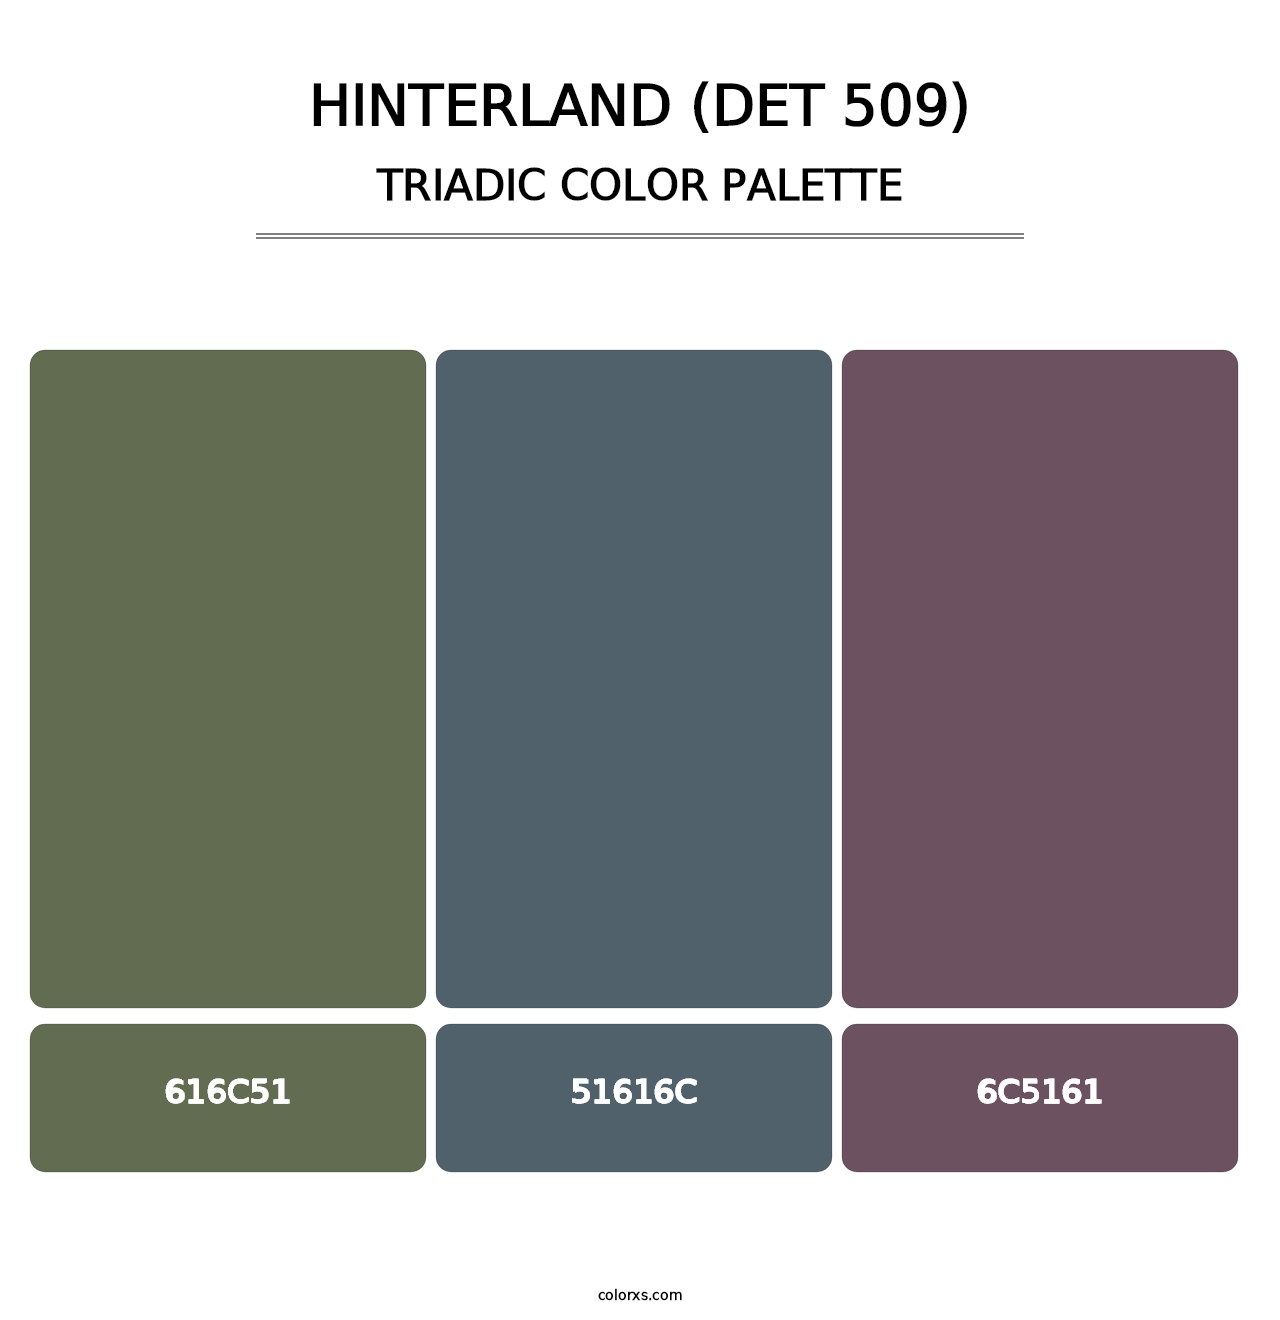 Hinterland (DET 509) - Triadic Color Palette